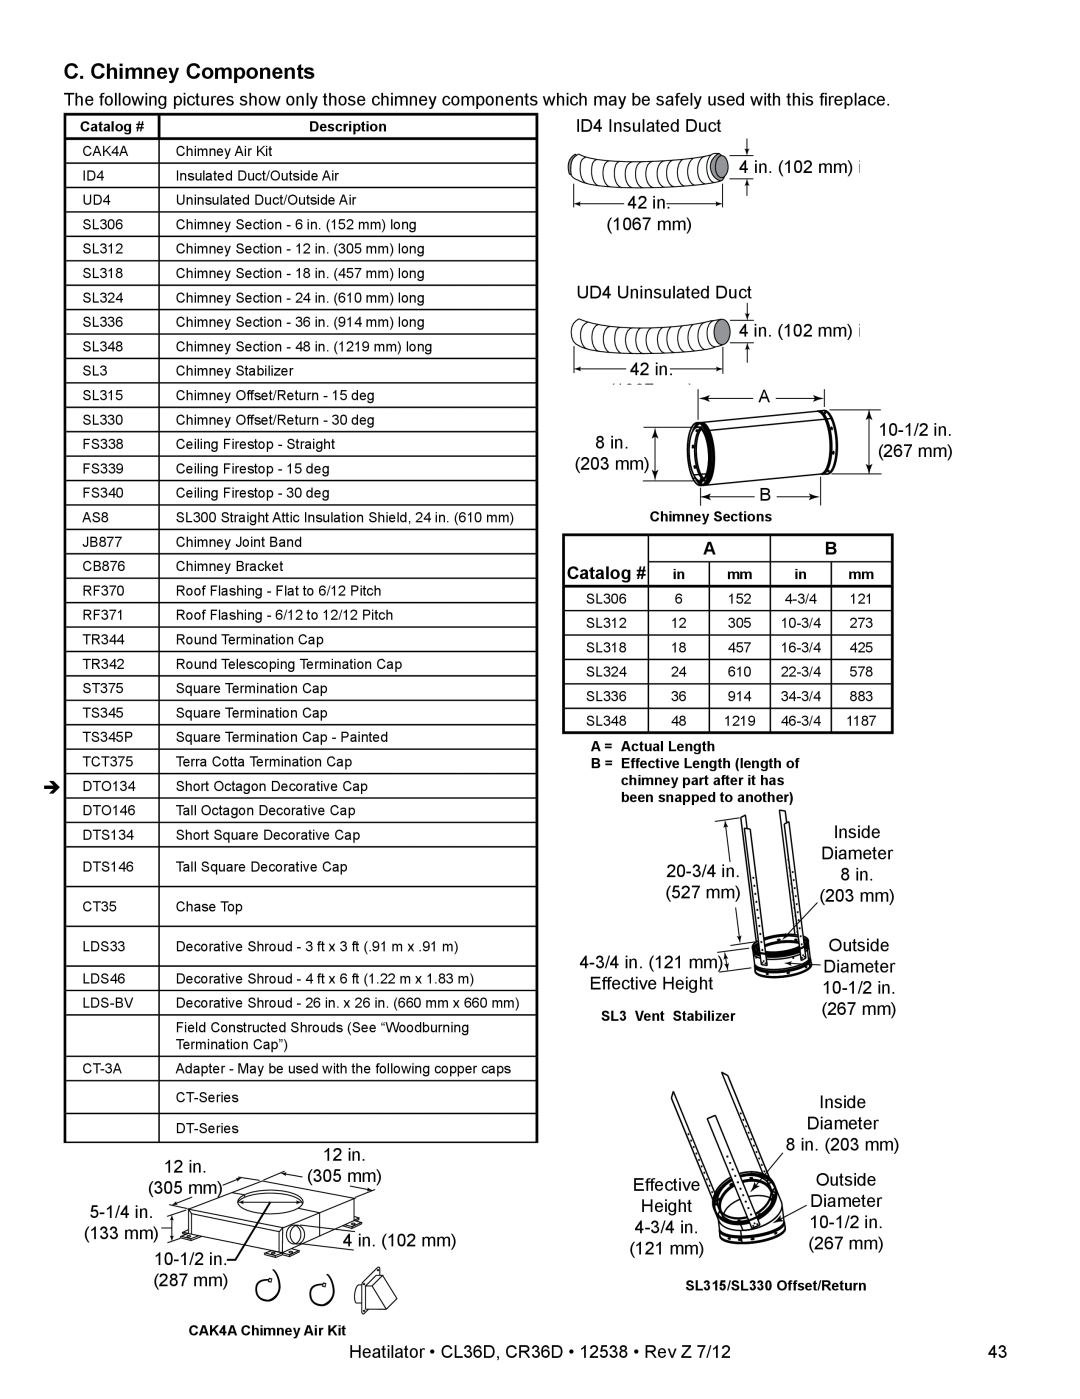 Heatiator CL36D owner manual C. Chimney Components, Catalog # 